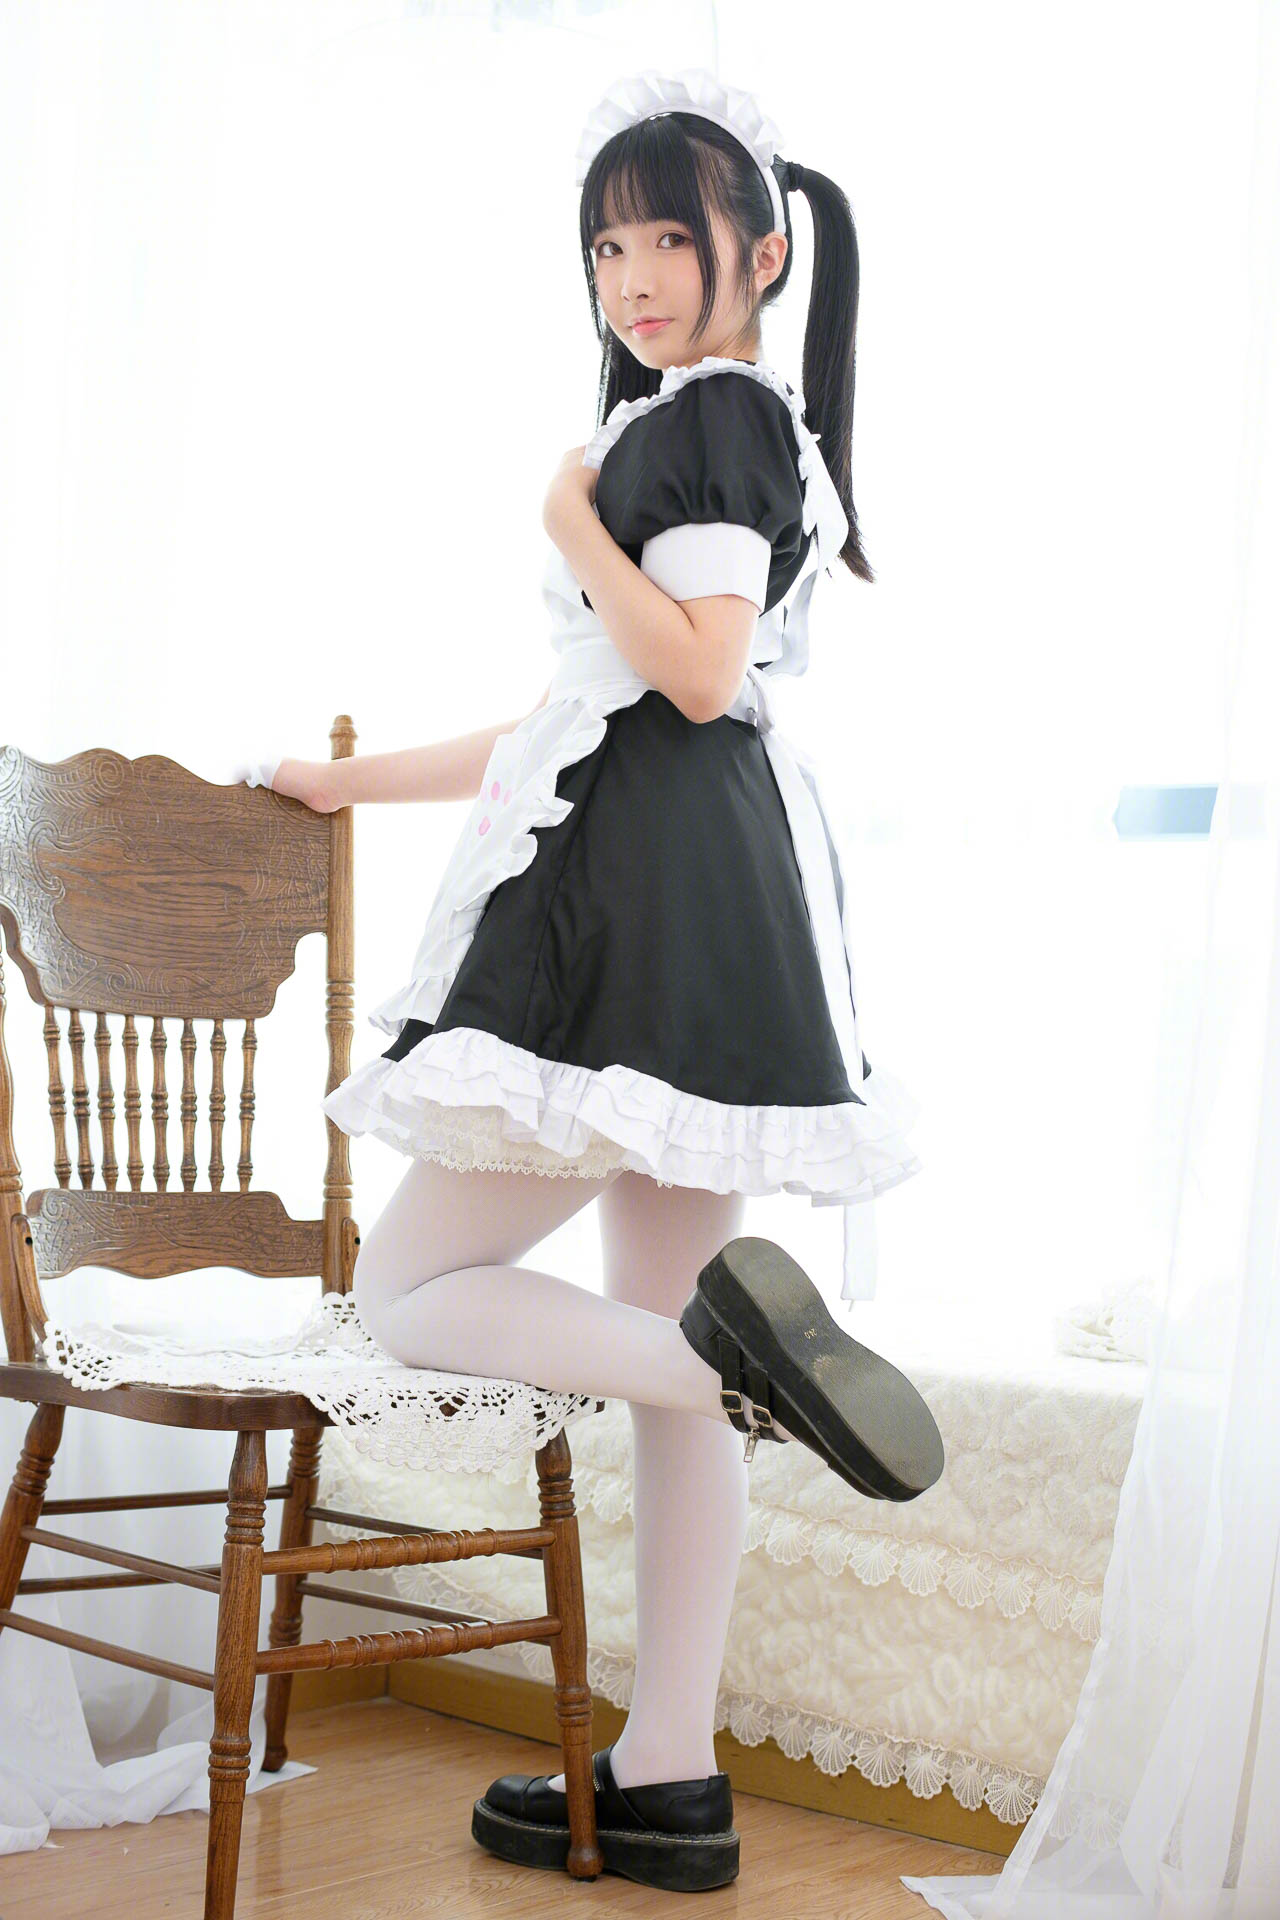 【SSR系列】森萝财团写真 SSR-007 双马尾学生妹室内女仆装写真 [71图-0视频-365MB] 第4张